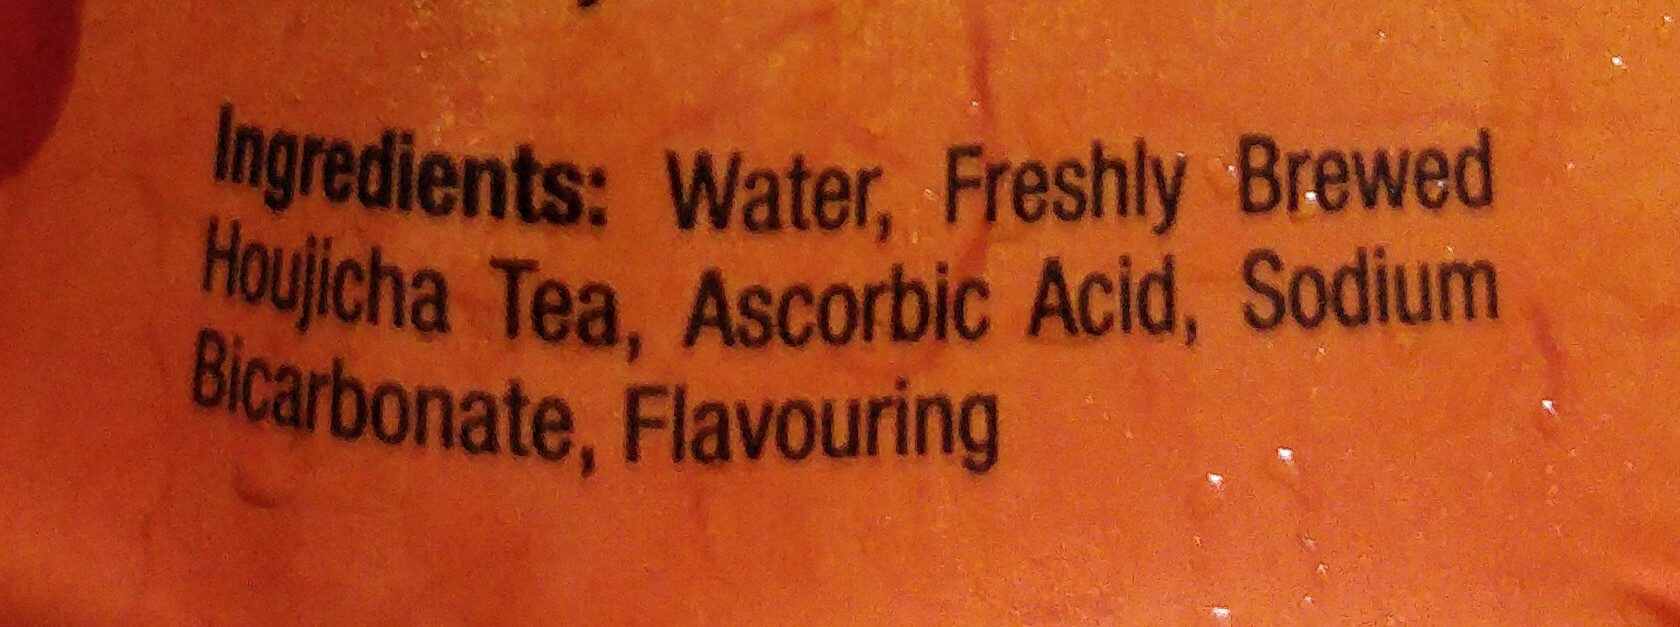 Houjicha Roasted Tea - Ingredients